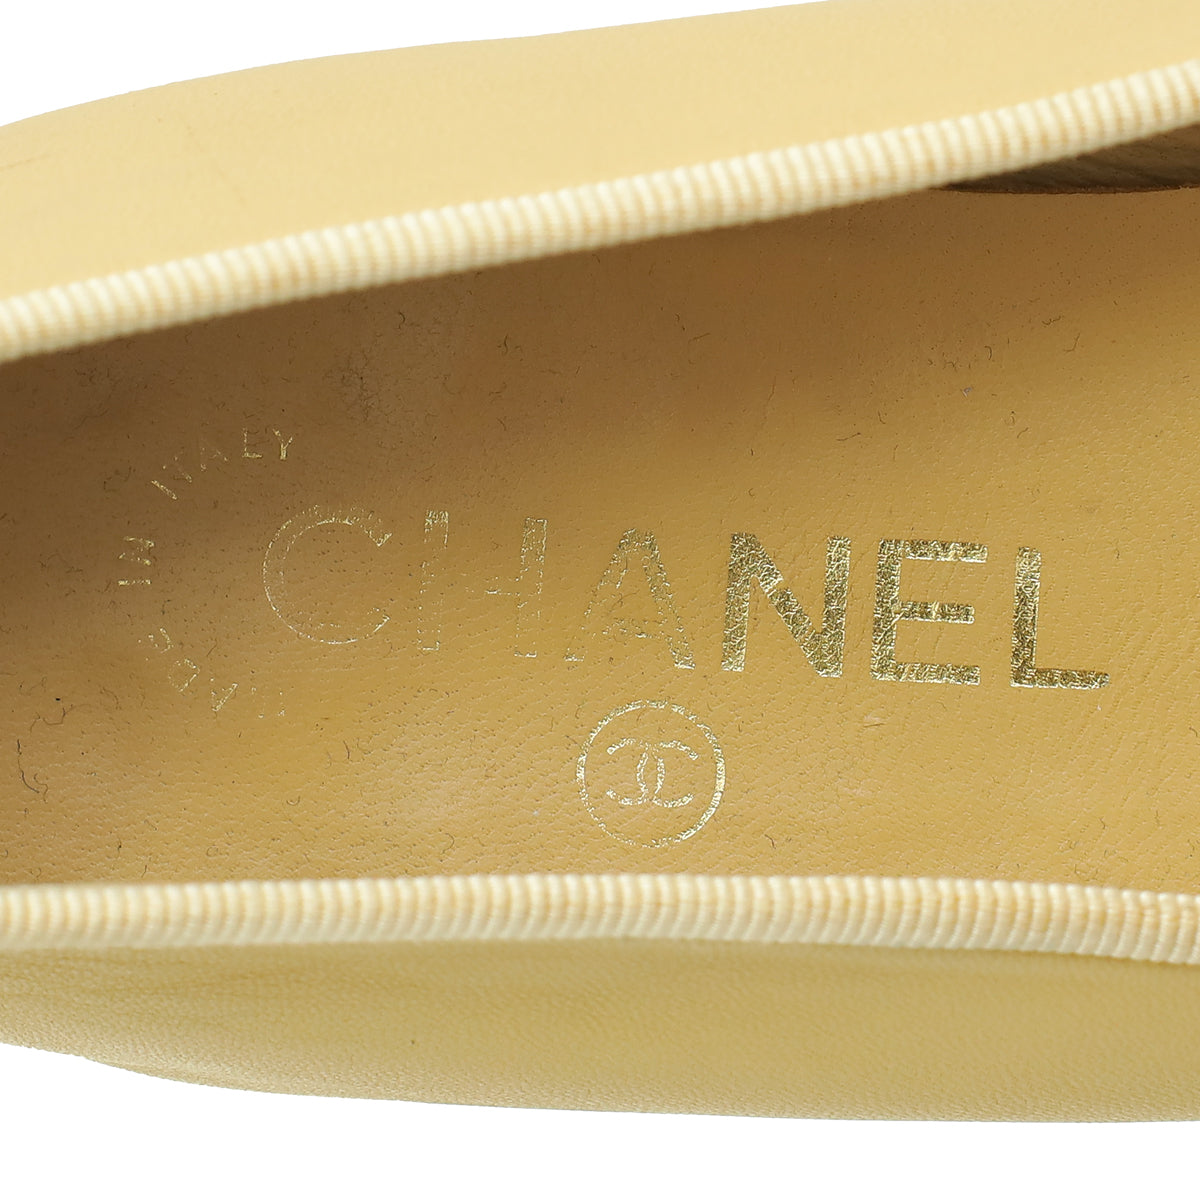 Chanel Bicolor CC Cap Toe Flat Ballerina 38